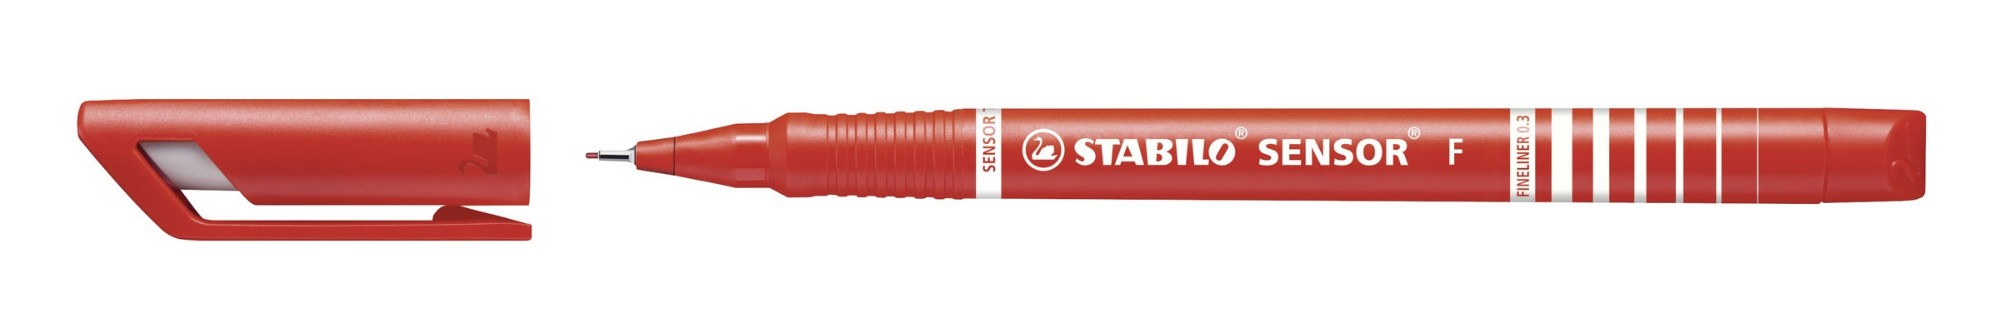 Stabilo Sensor Cushion Tip Fineliner Pen Red (Pack of 10) 189/40